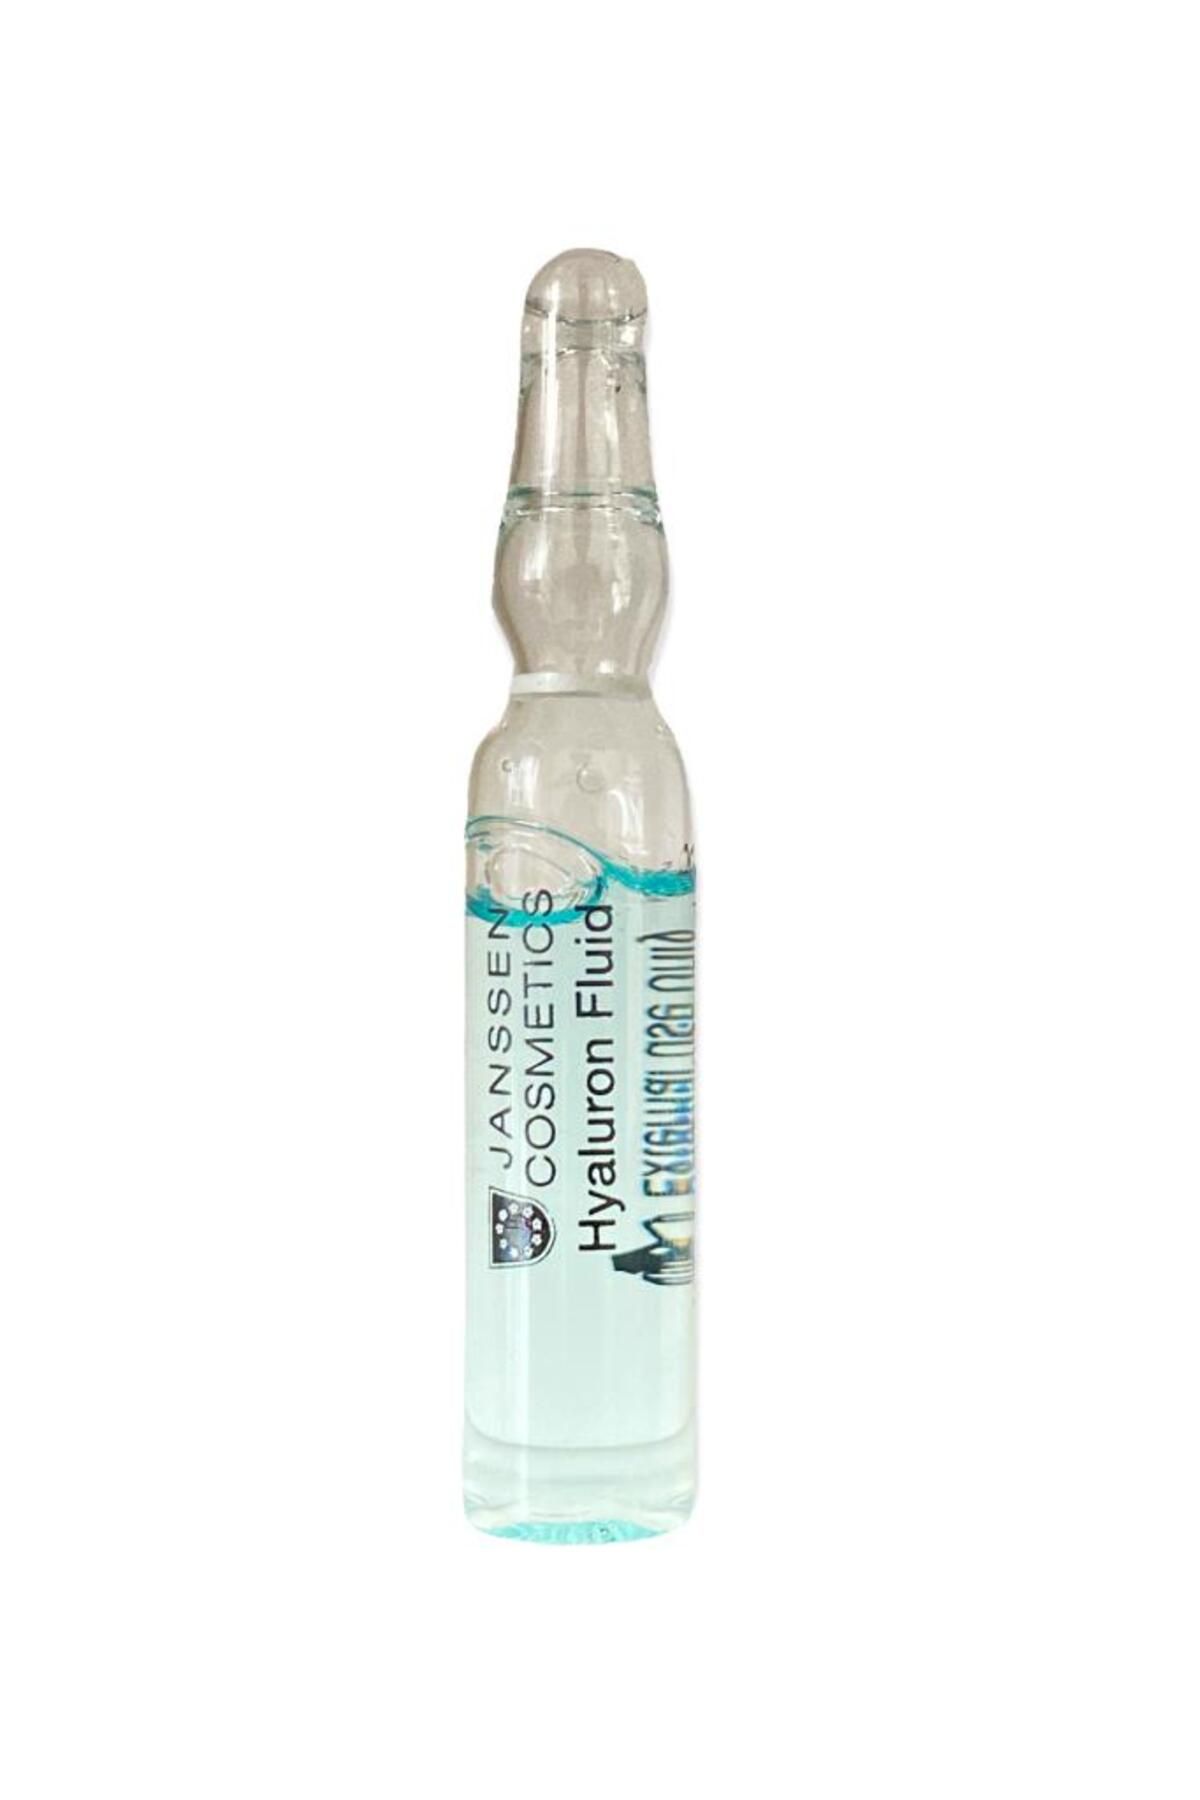 Janssen Cosmetics Hyaluron Fluid 2 ml Ampul Tekli